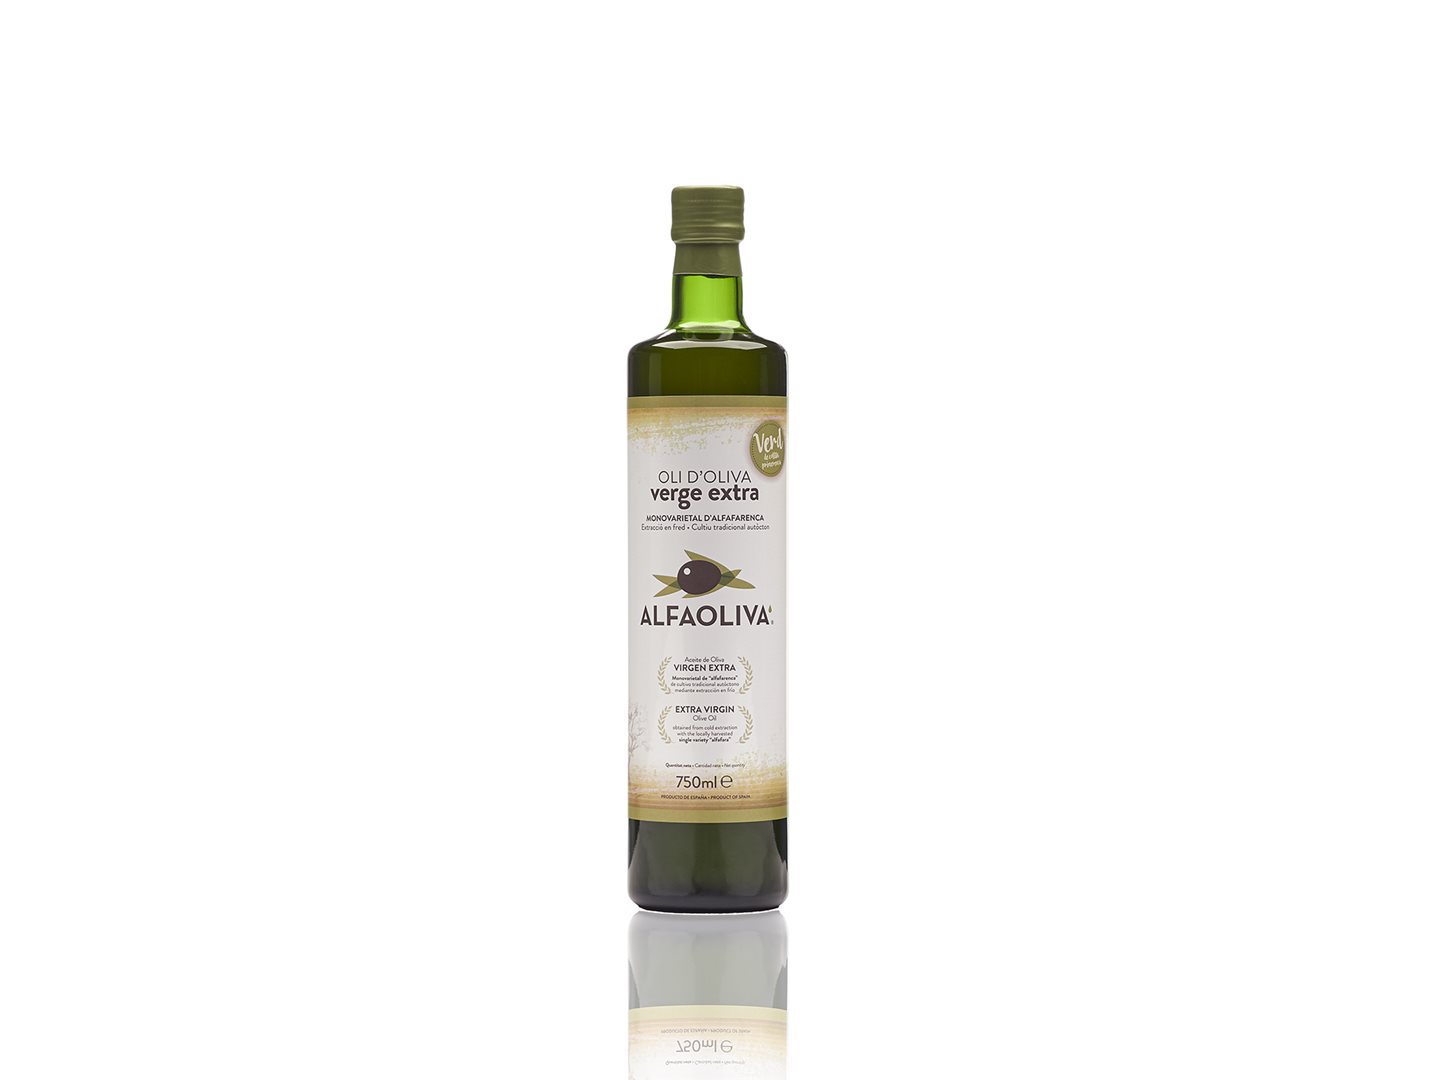 Aceite de Oliva Virgen Extra VERDE – 750ml – Monovarietal de Alfafarenca – Recolección aceituna en verde